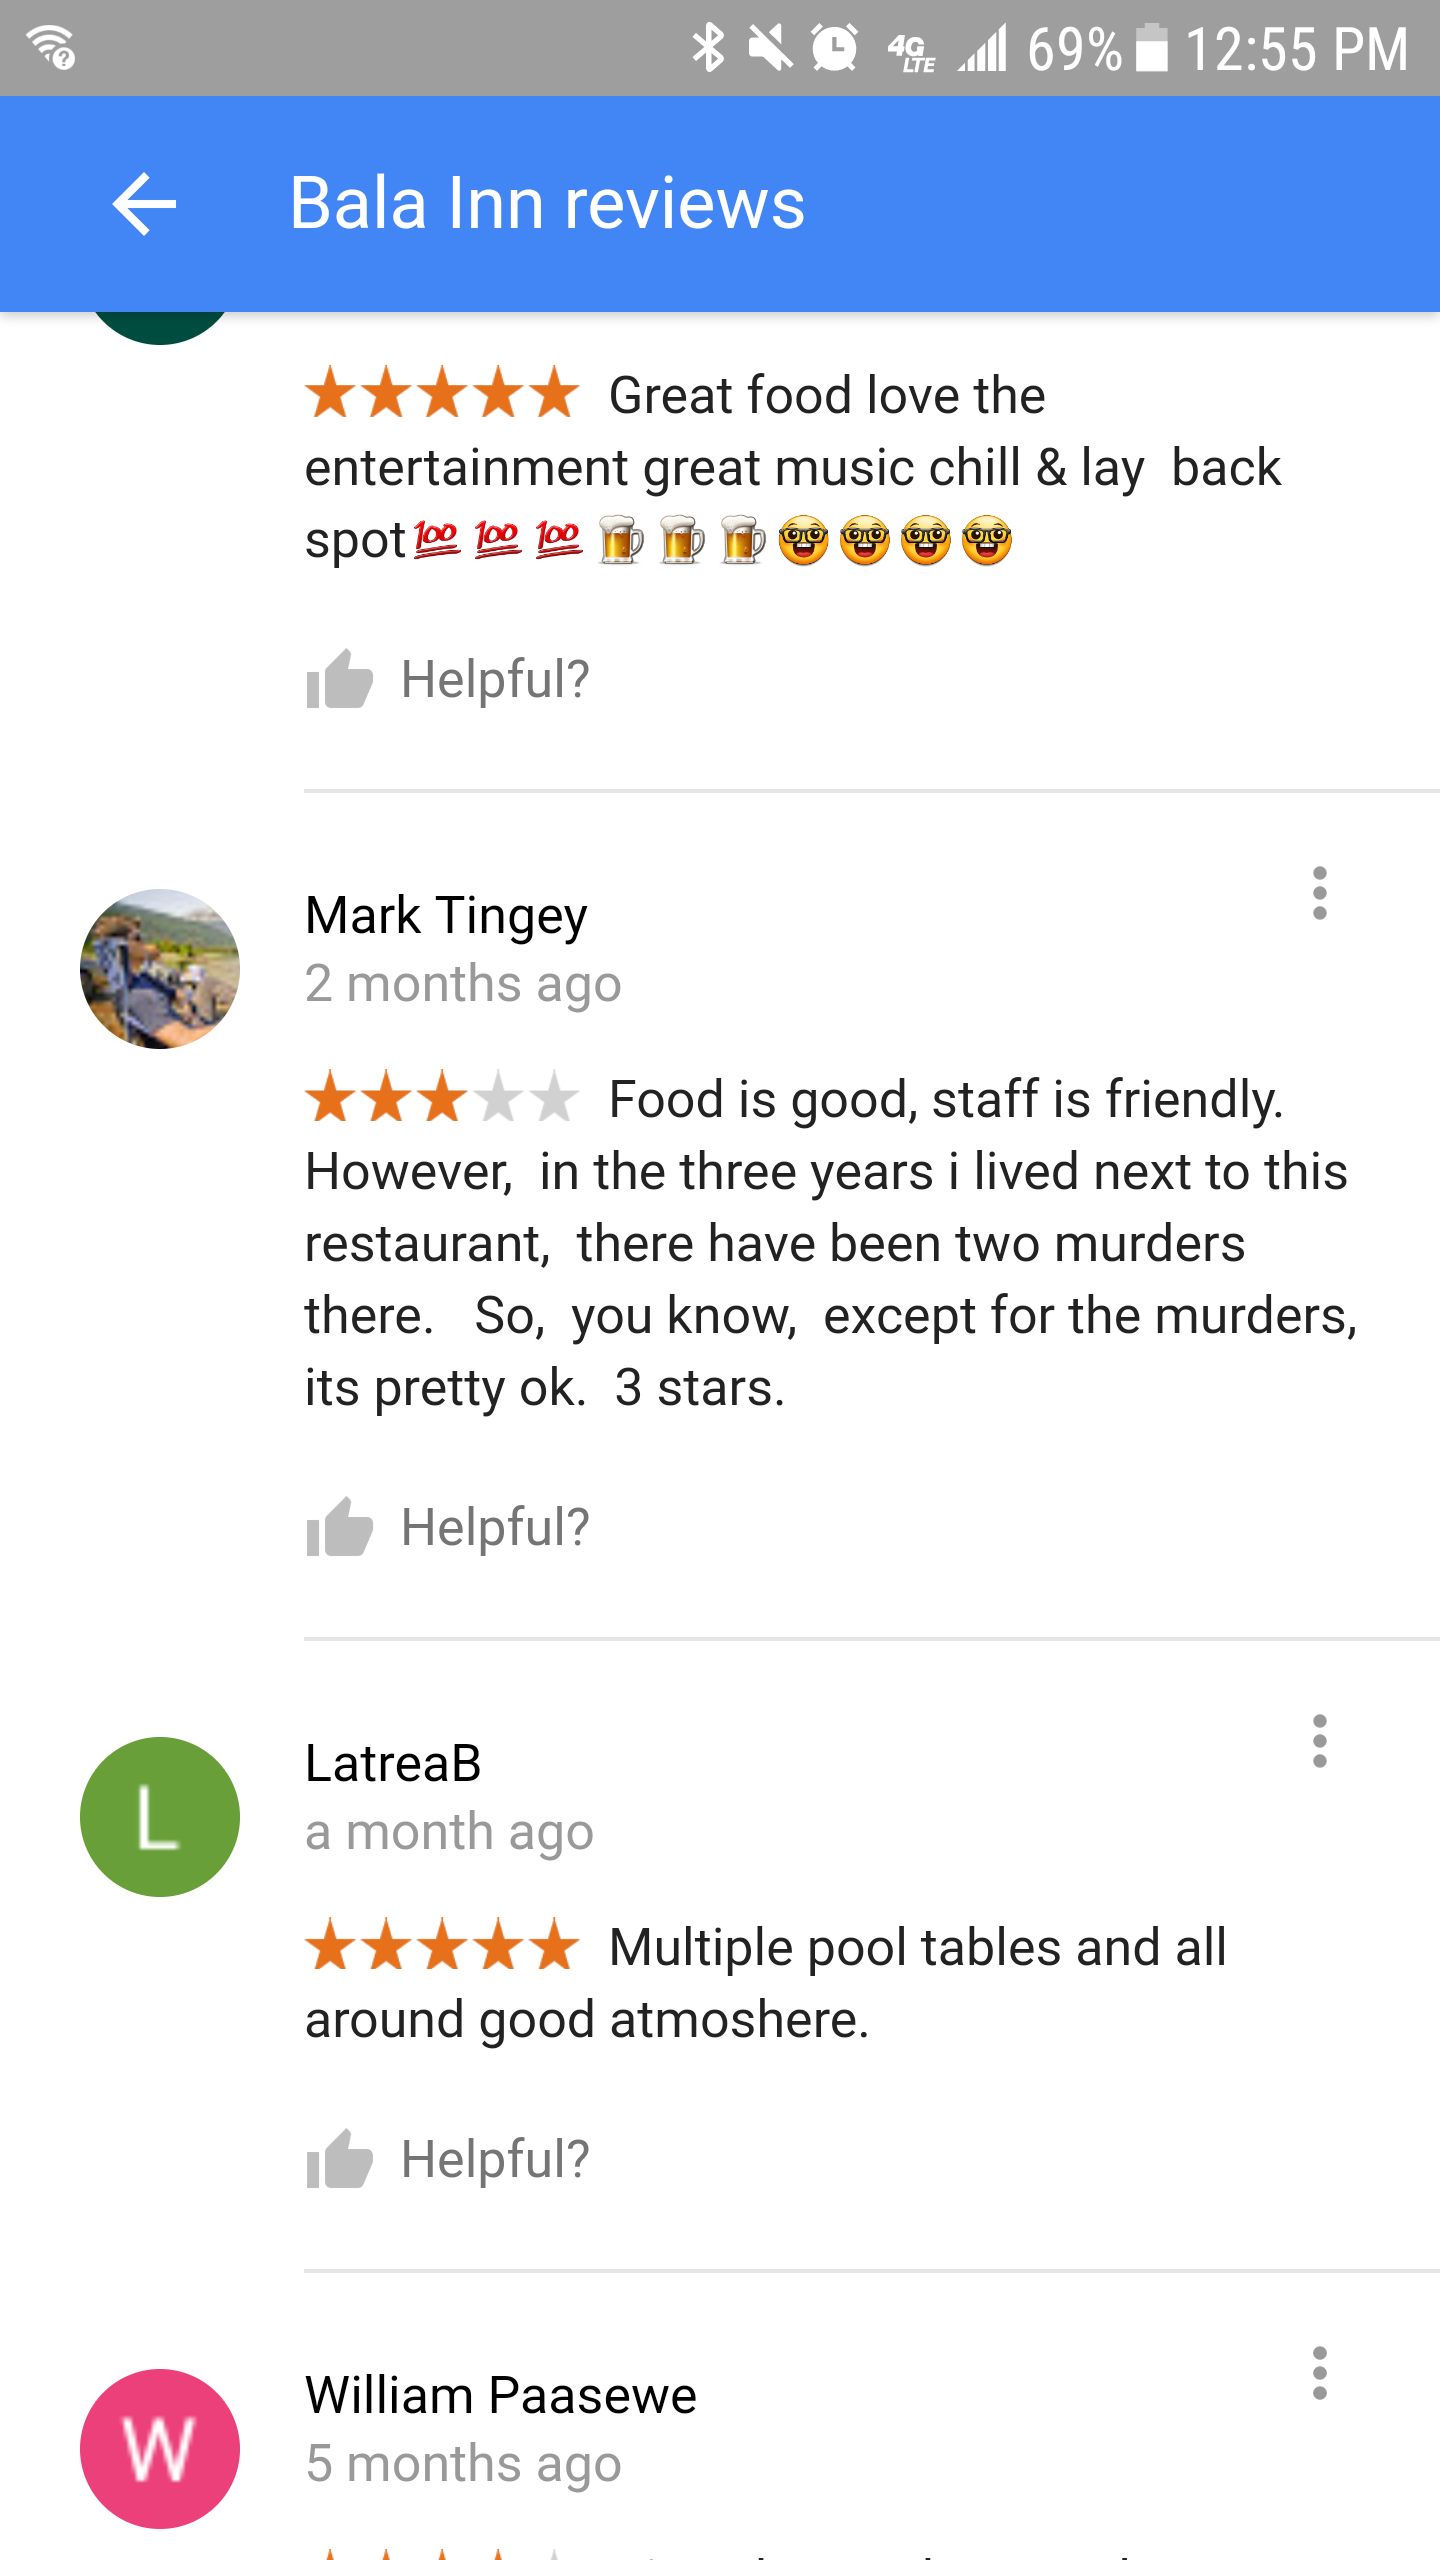 Food is good, staff is friendly.